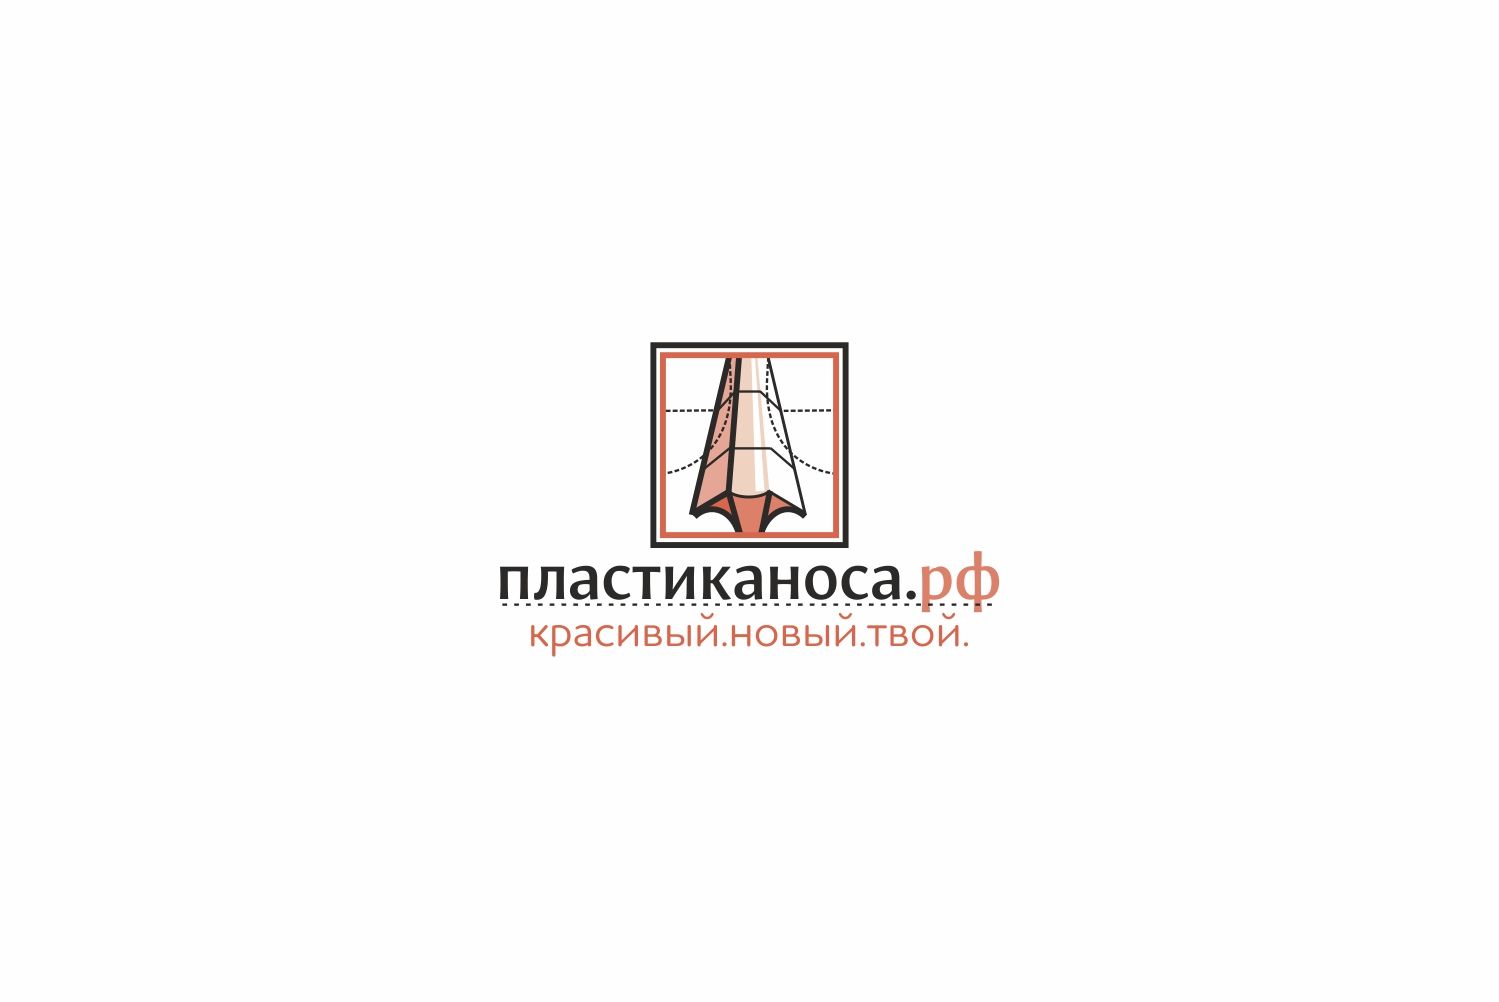 Логотип ПластикаНоса.рф - дизайнер Mewse